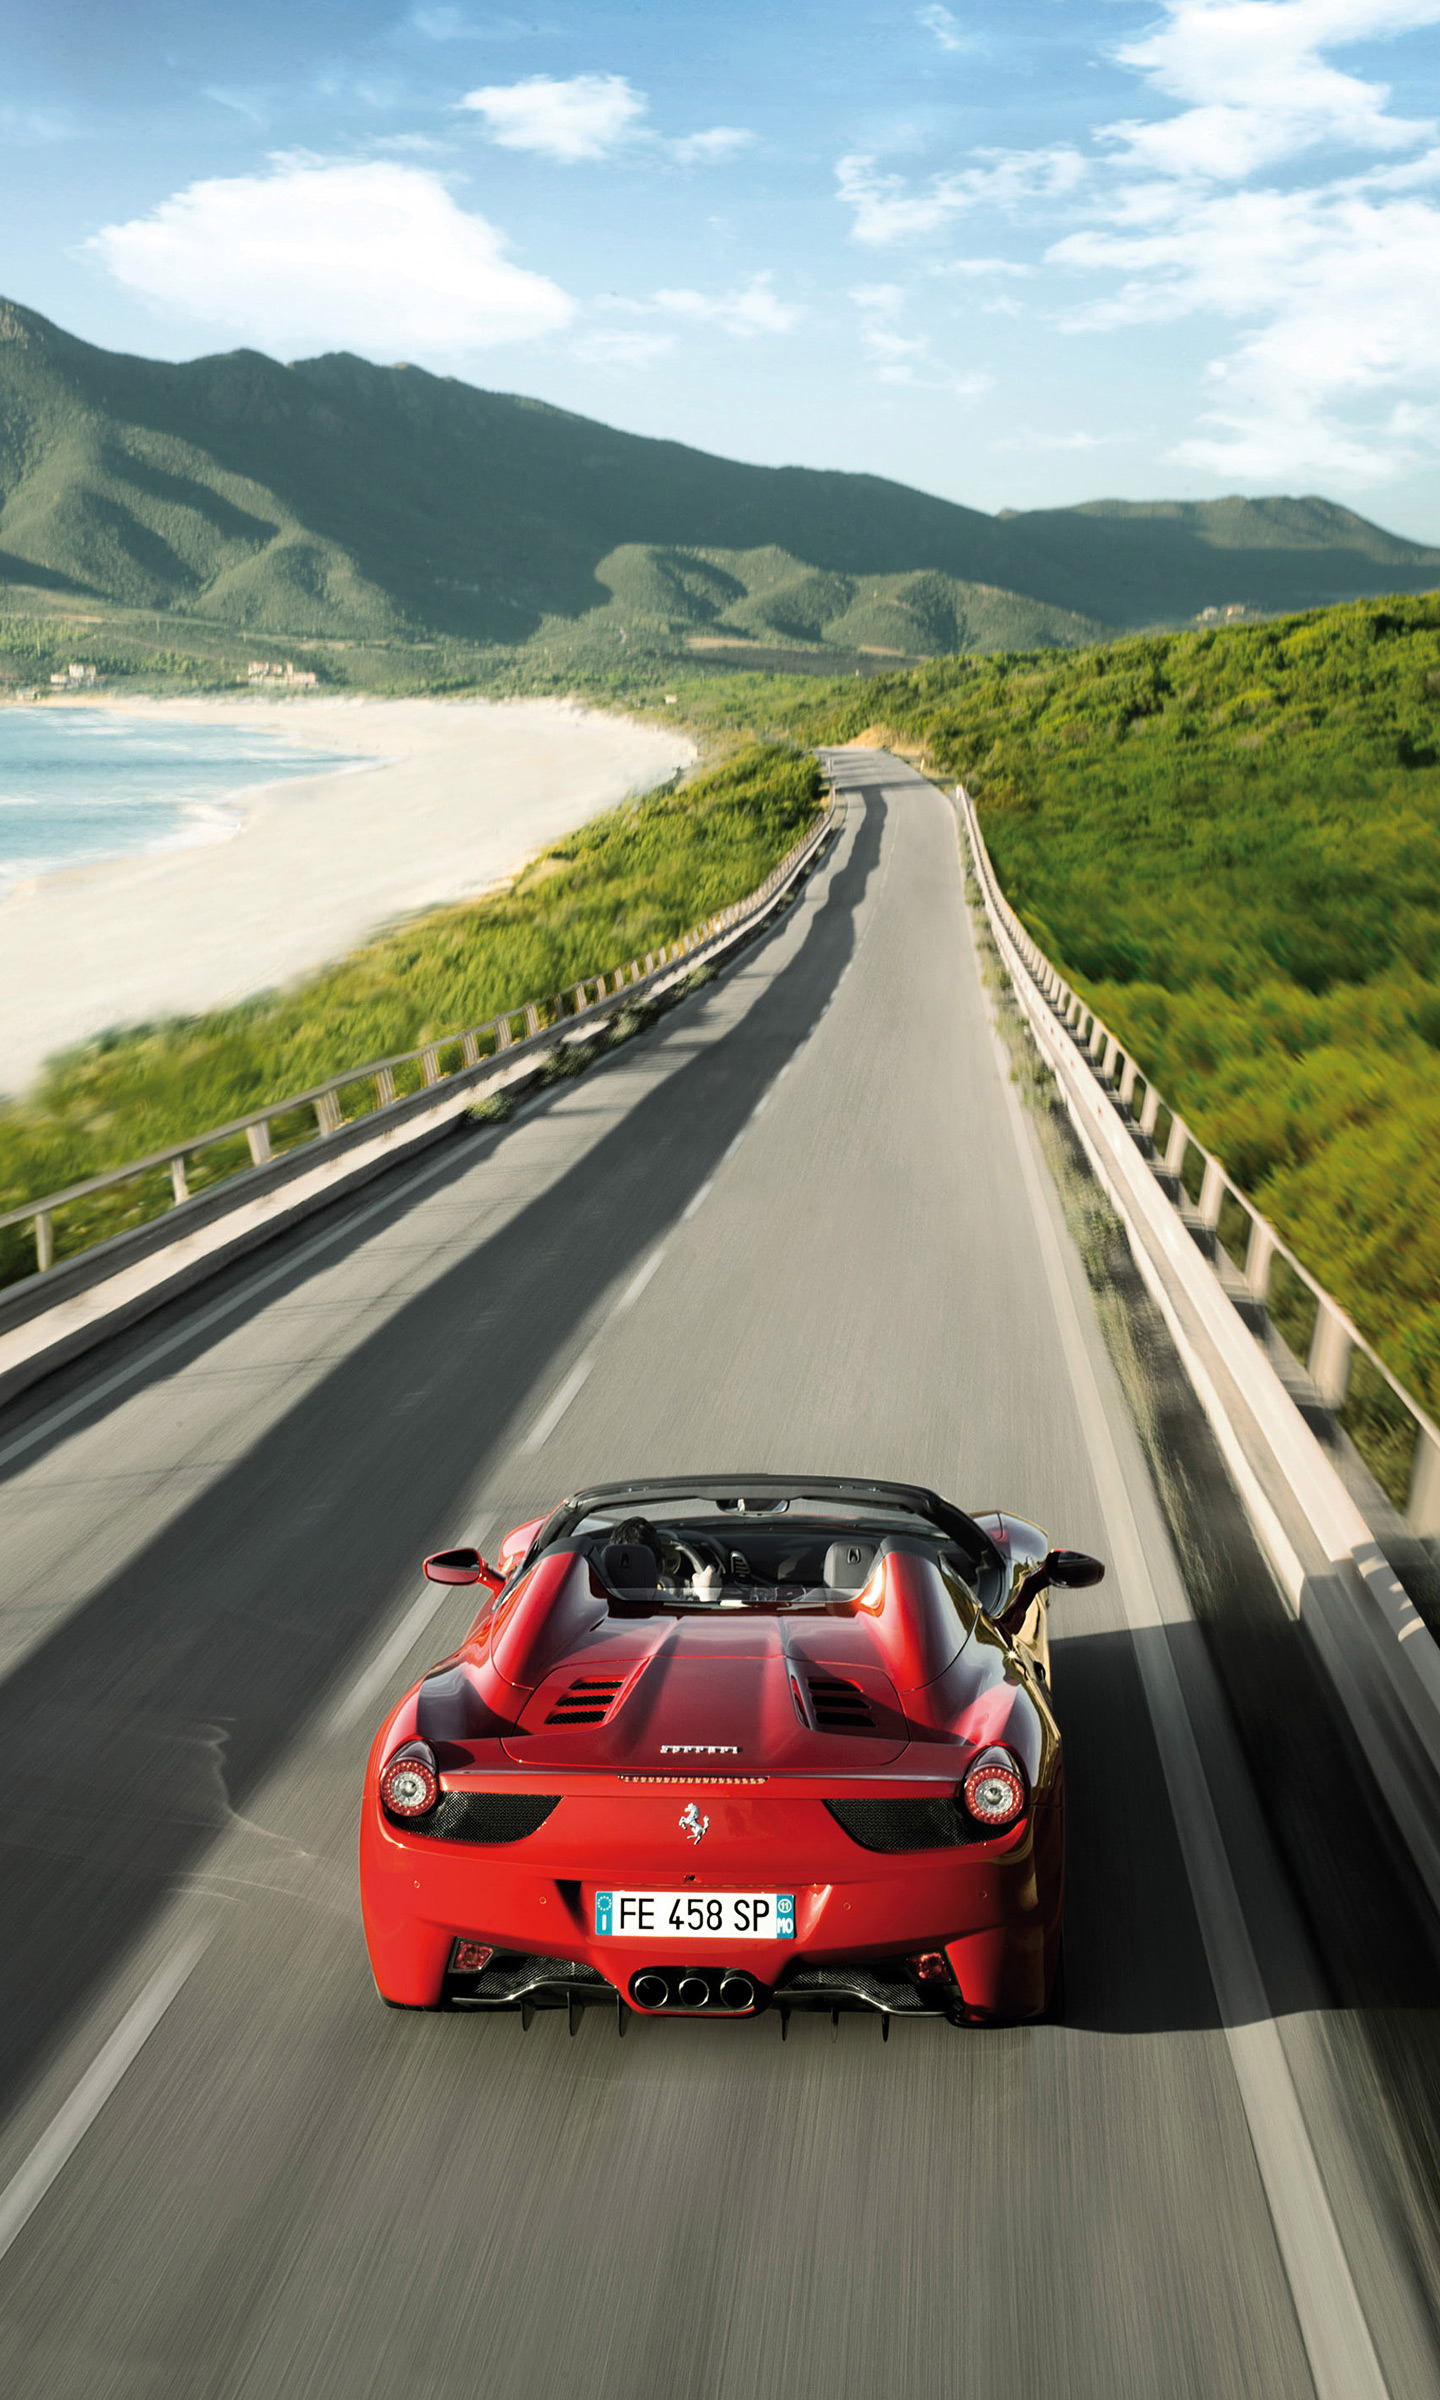  2013 Ferrari 458 Spider Wallpaper.